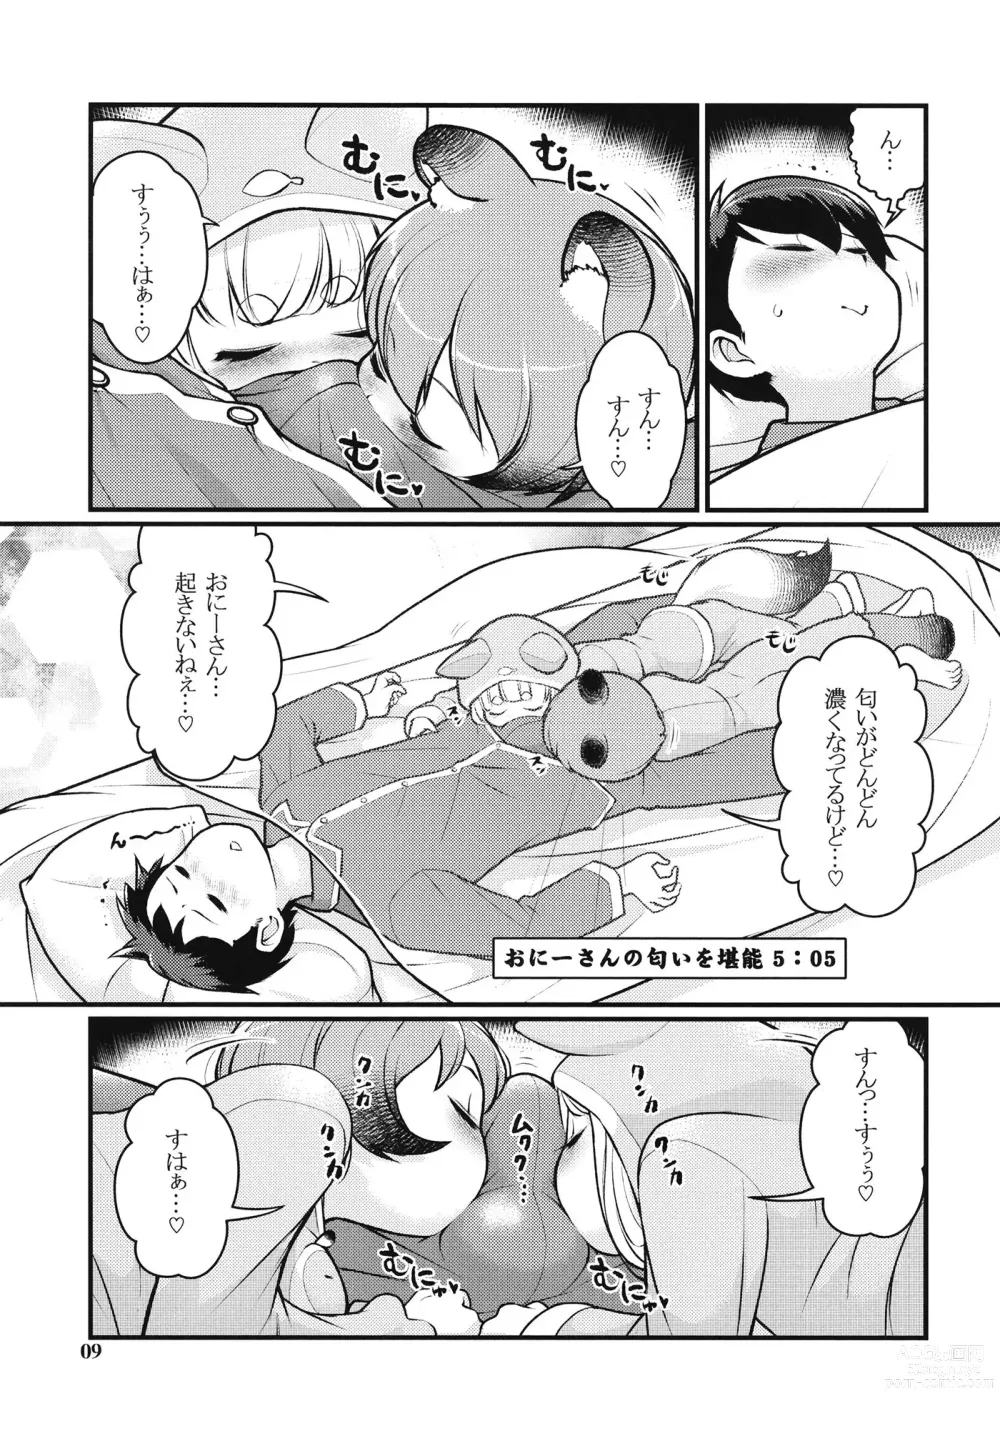 Page 8 of doujinshi KemoMimi Morning Routine 2